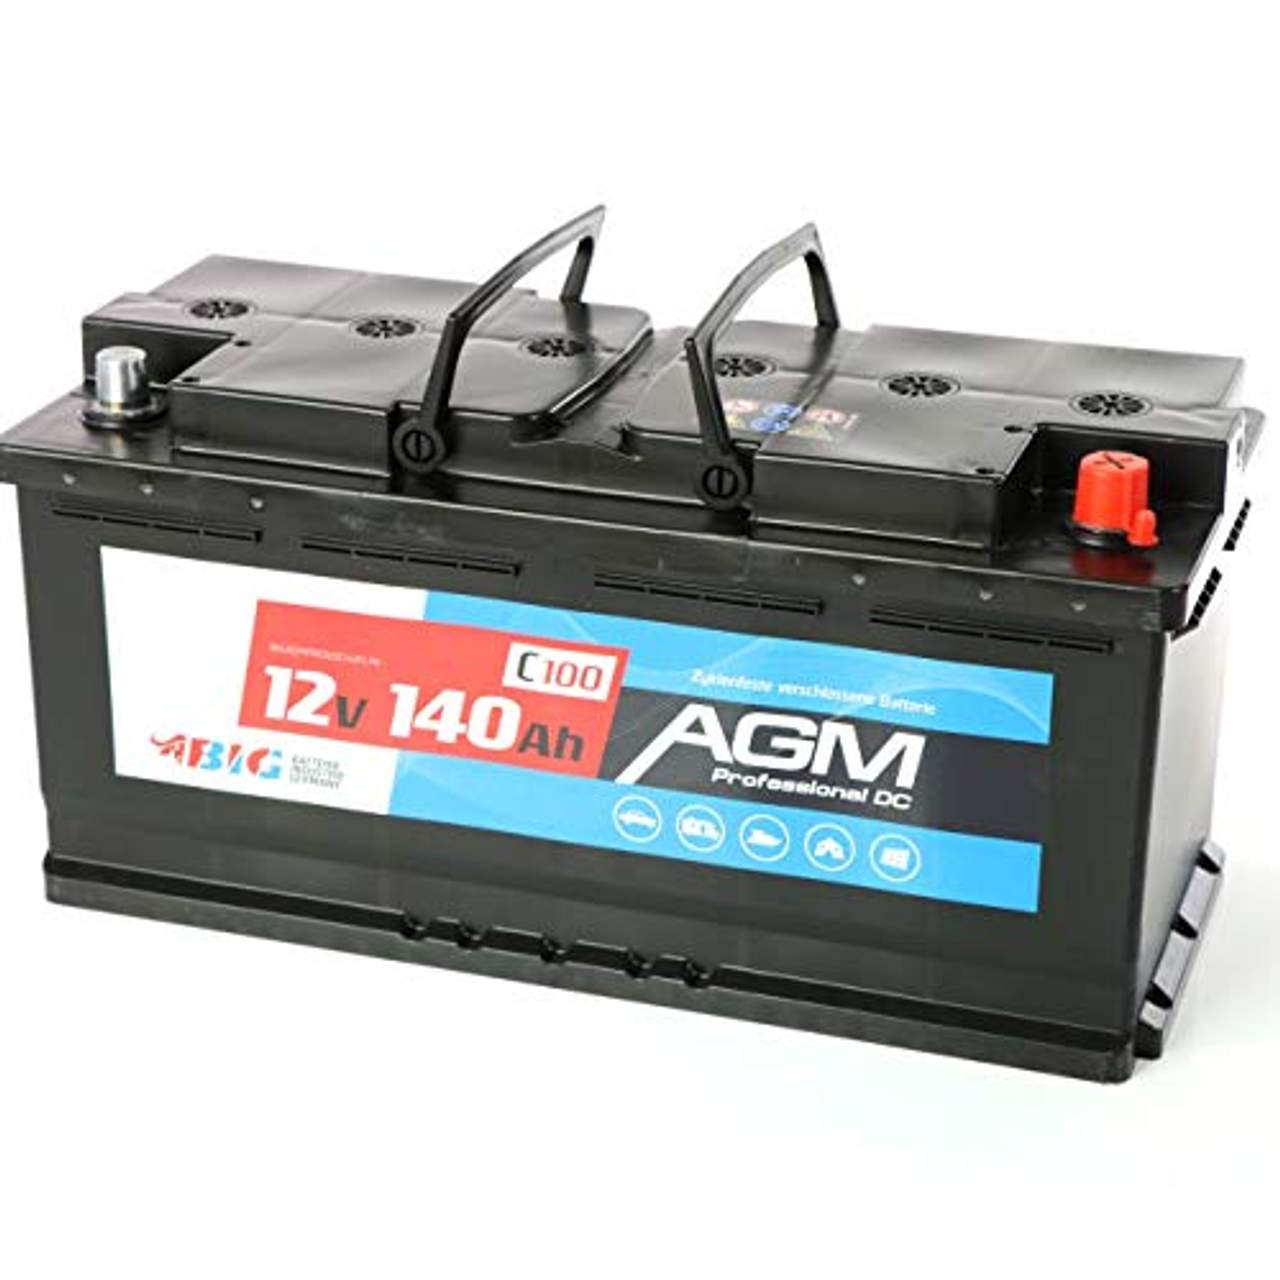 BIG Versorgungsbatterie AGM 12V 140Ah C100 Solar-Batterie